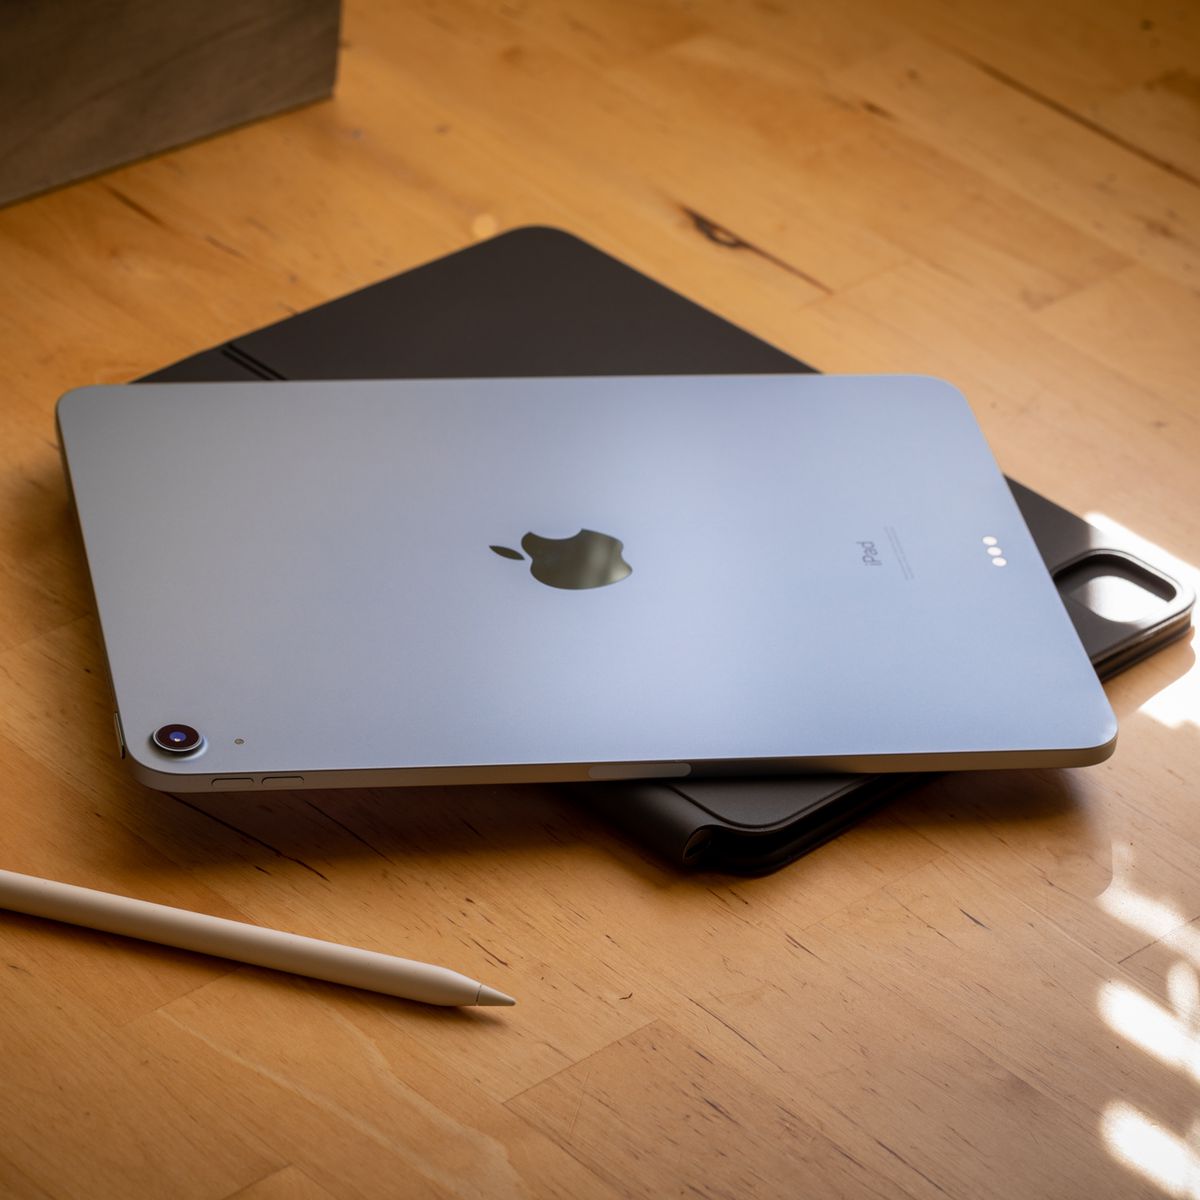 The 2020 iPad Air and the new iPad Mini have the same design and shape as the iPad Pro